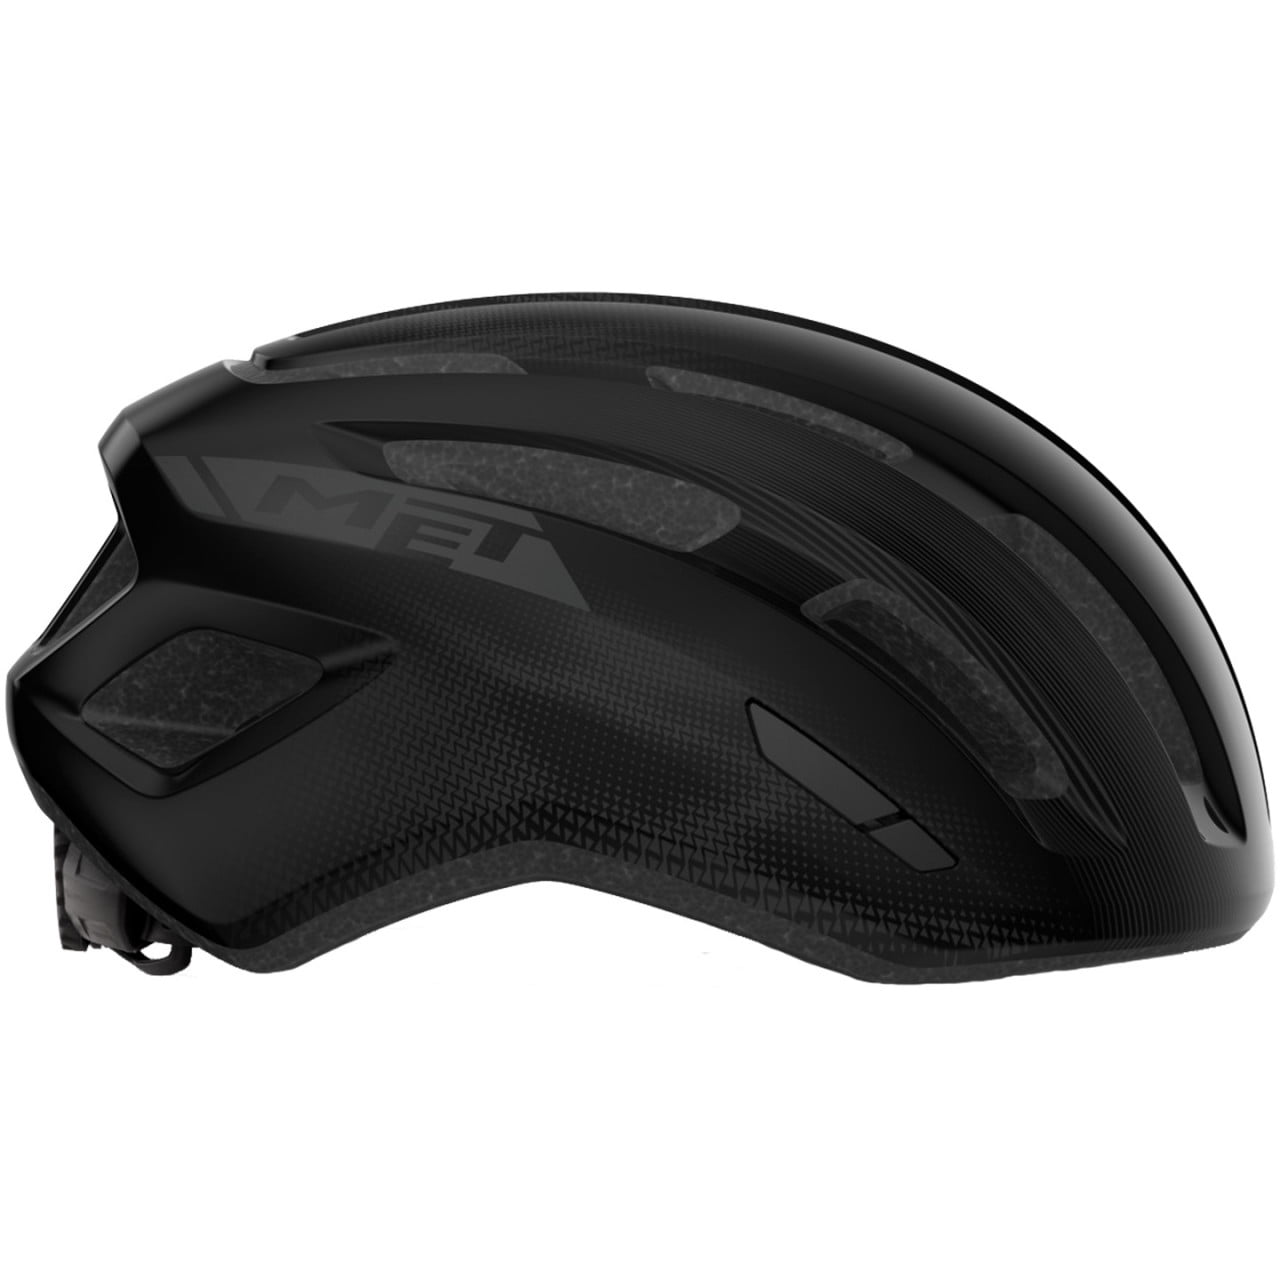 Radhelm Miles Mips Cycling Helmet